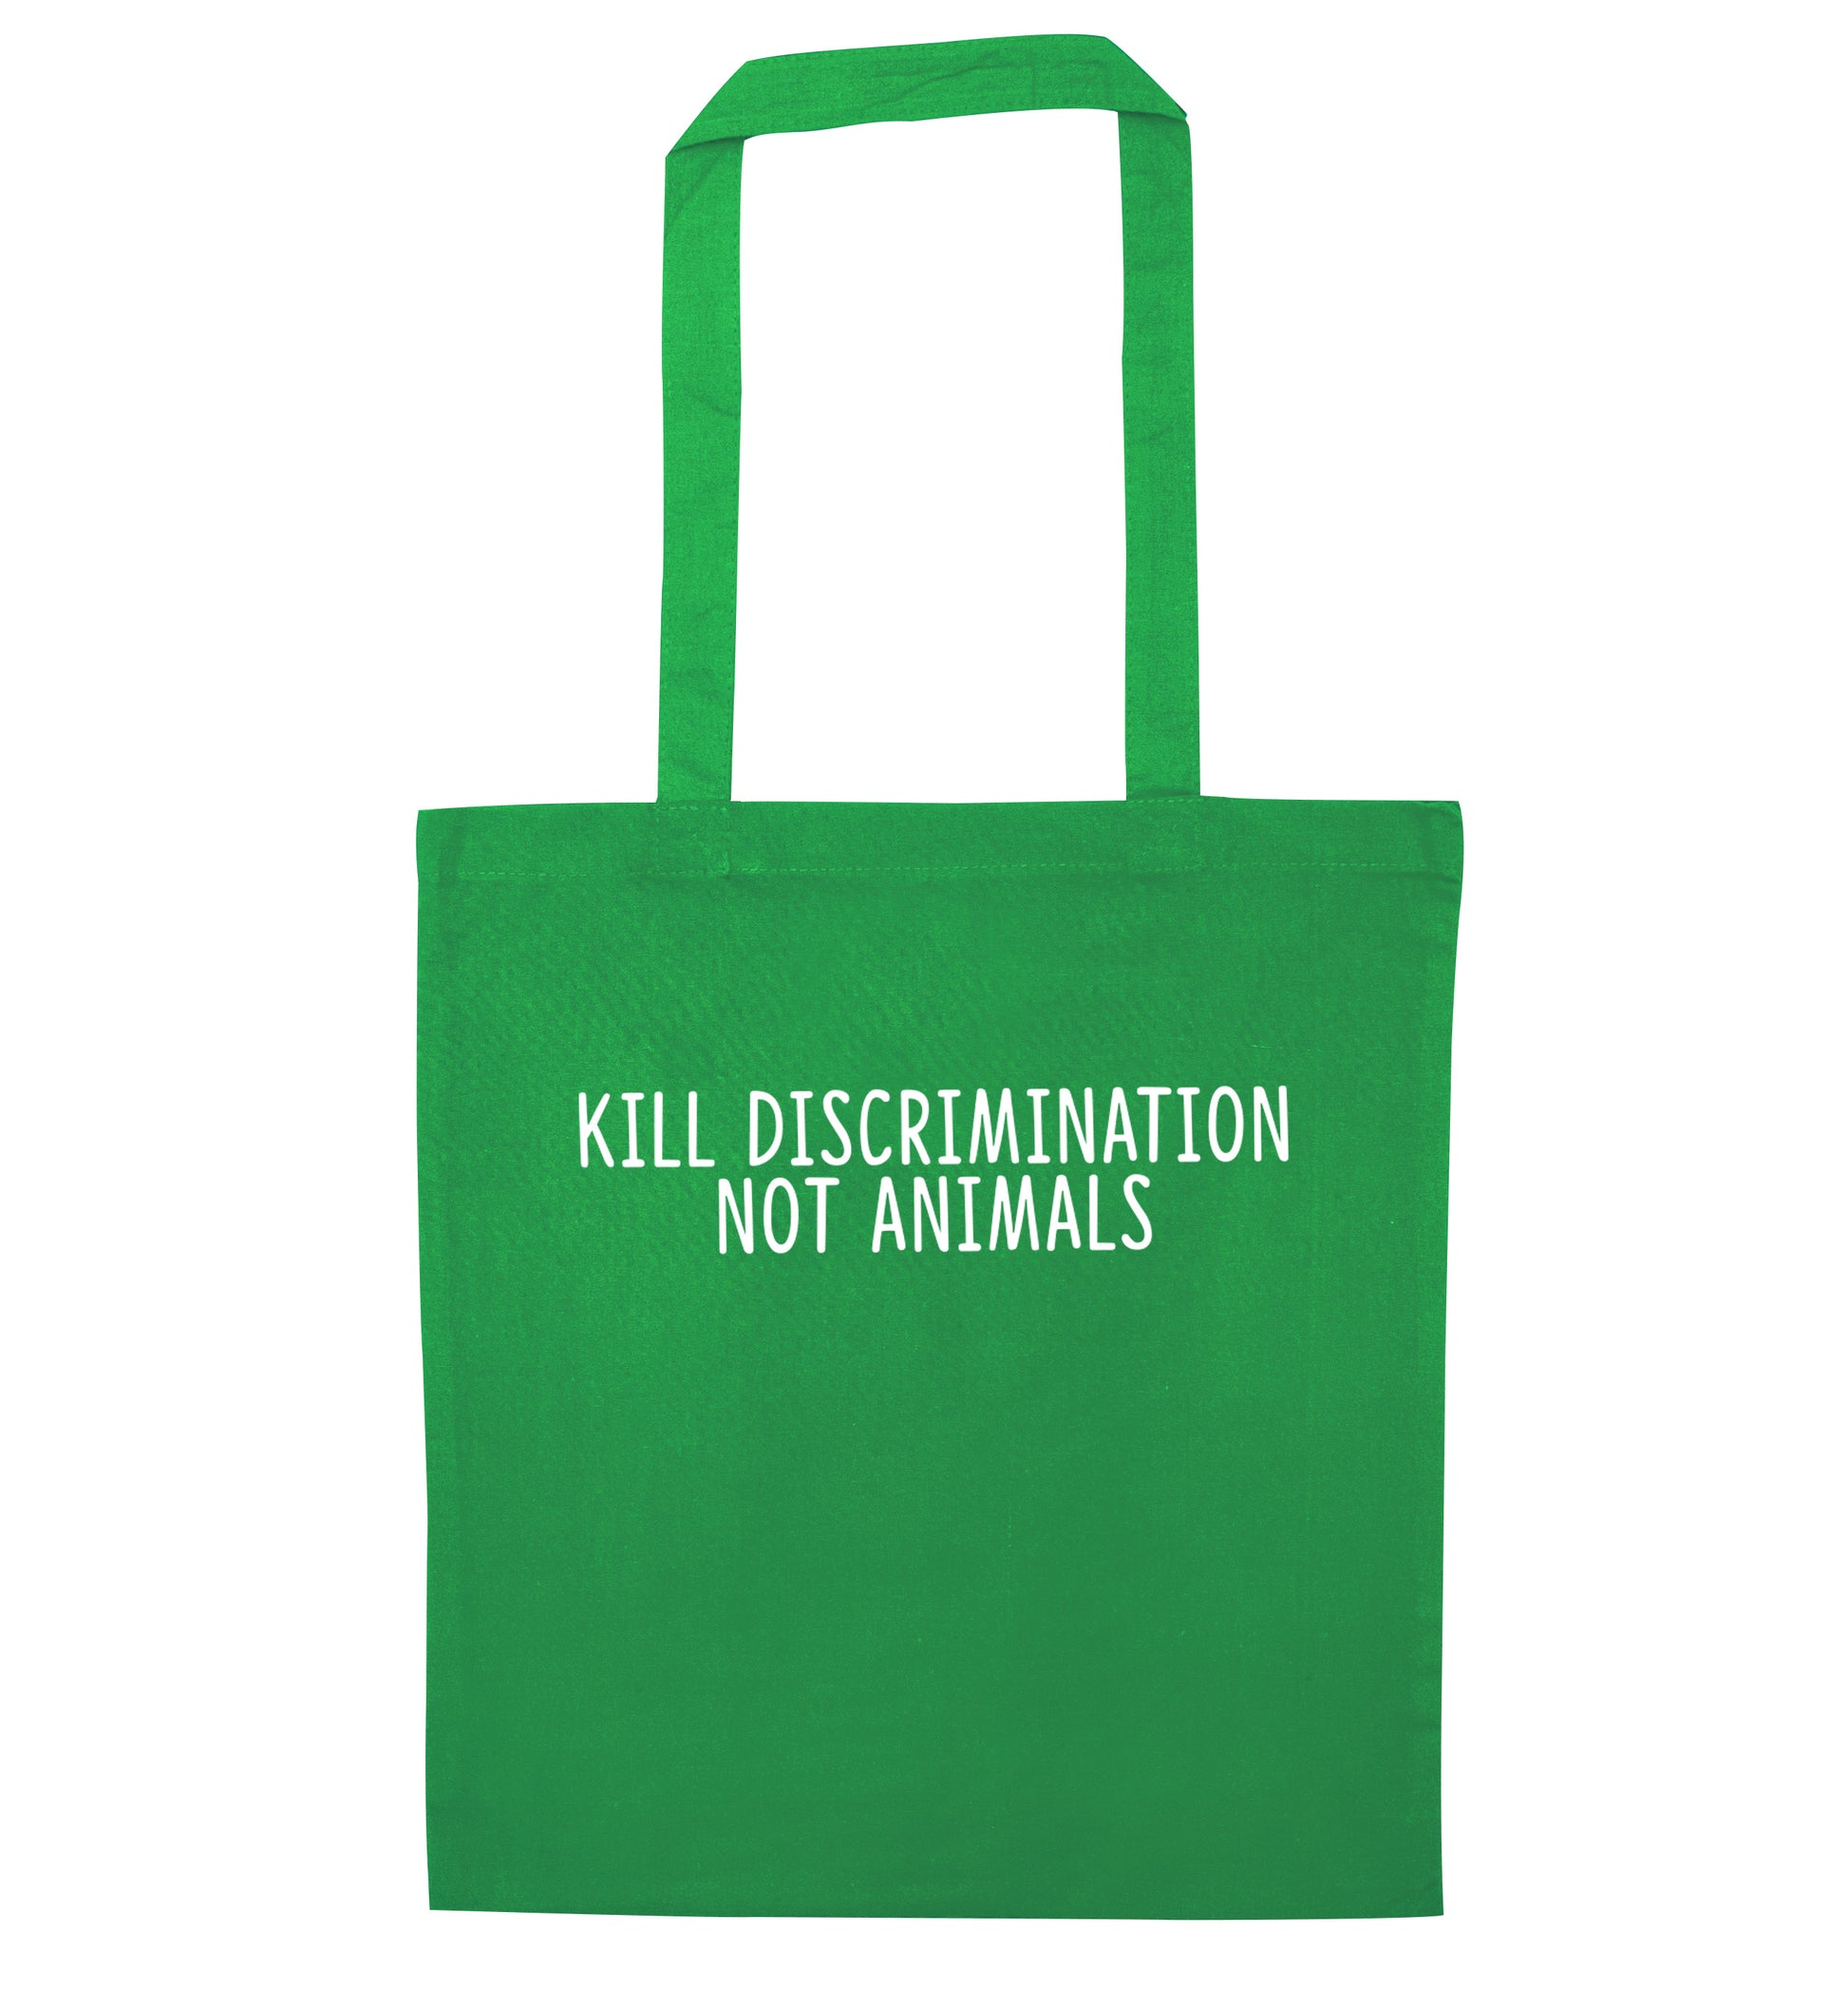 Kill Discrimination Not Animals green tote bag